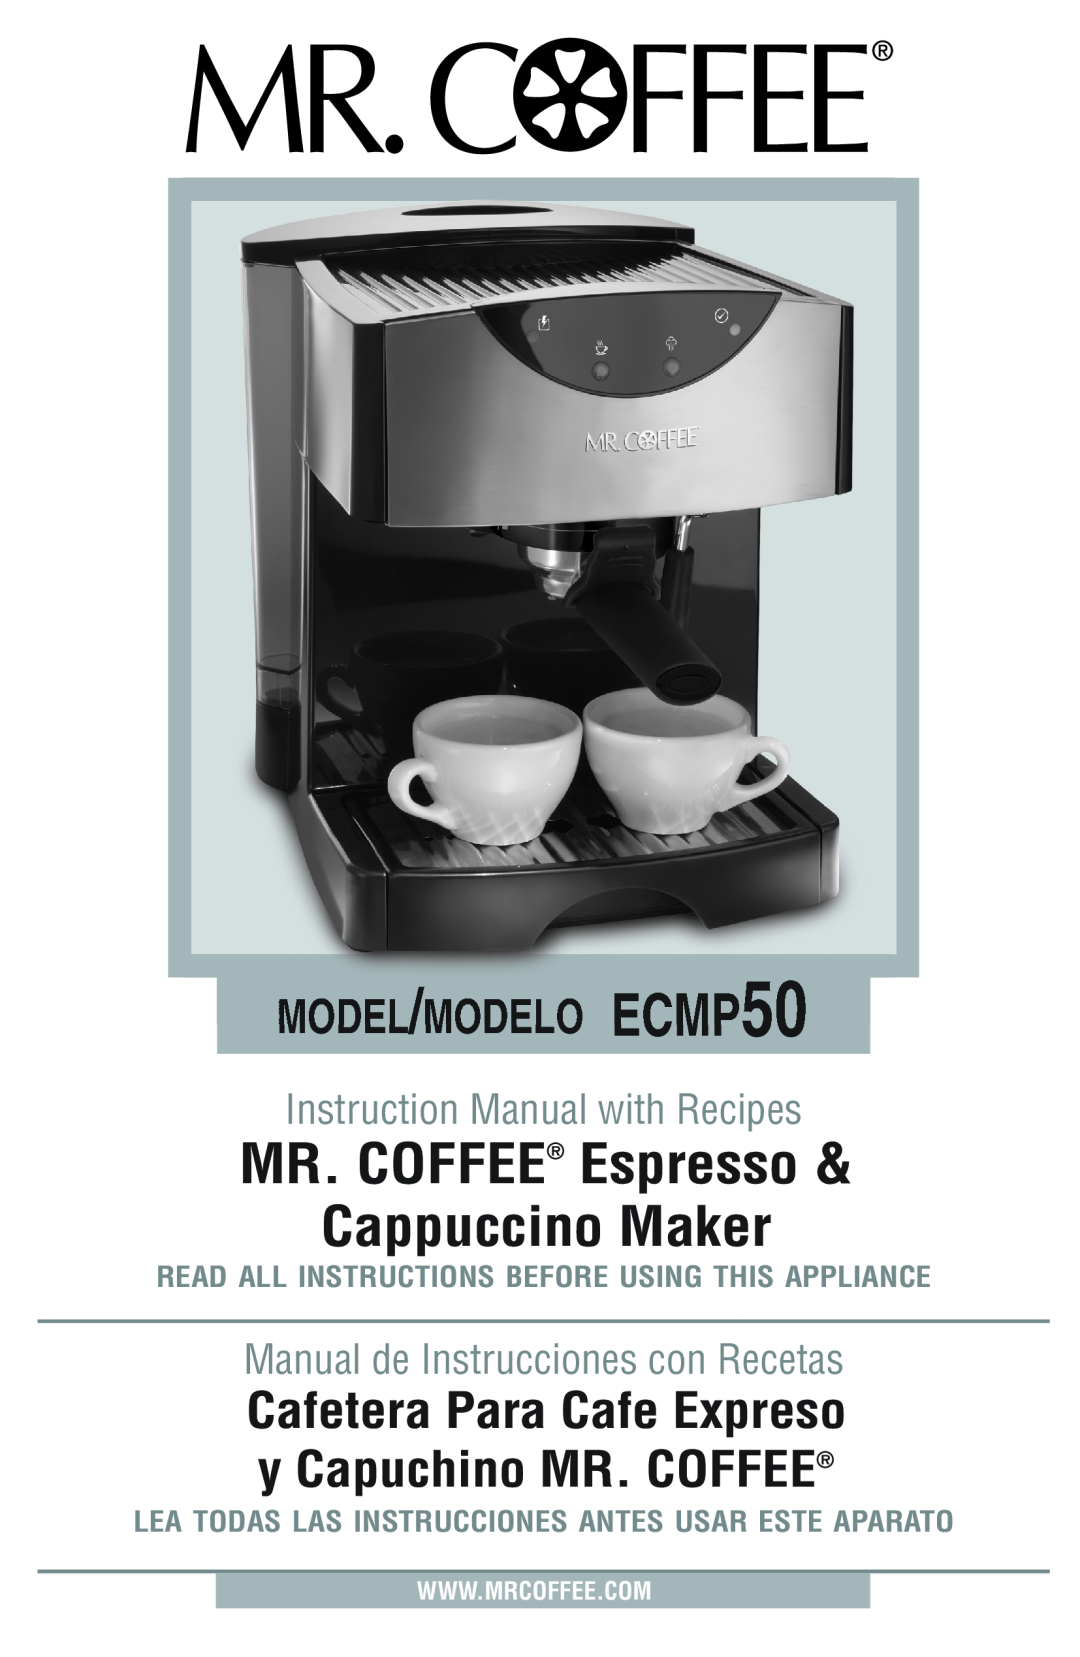 Mr. Coffee instruction manual MODEL/MODELO ECMP50, Cafetera Para Cafe Expreso y Capuchino MR. COFFEE 